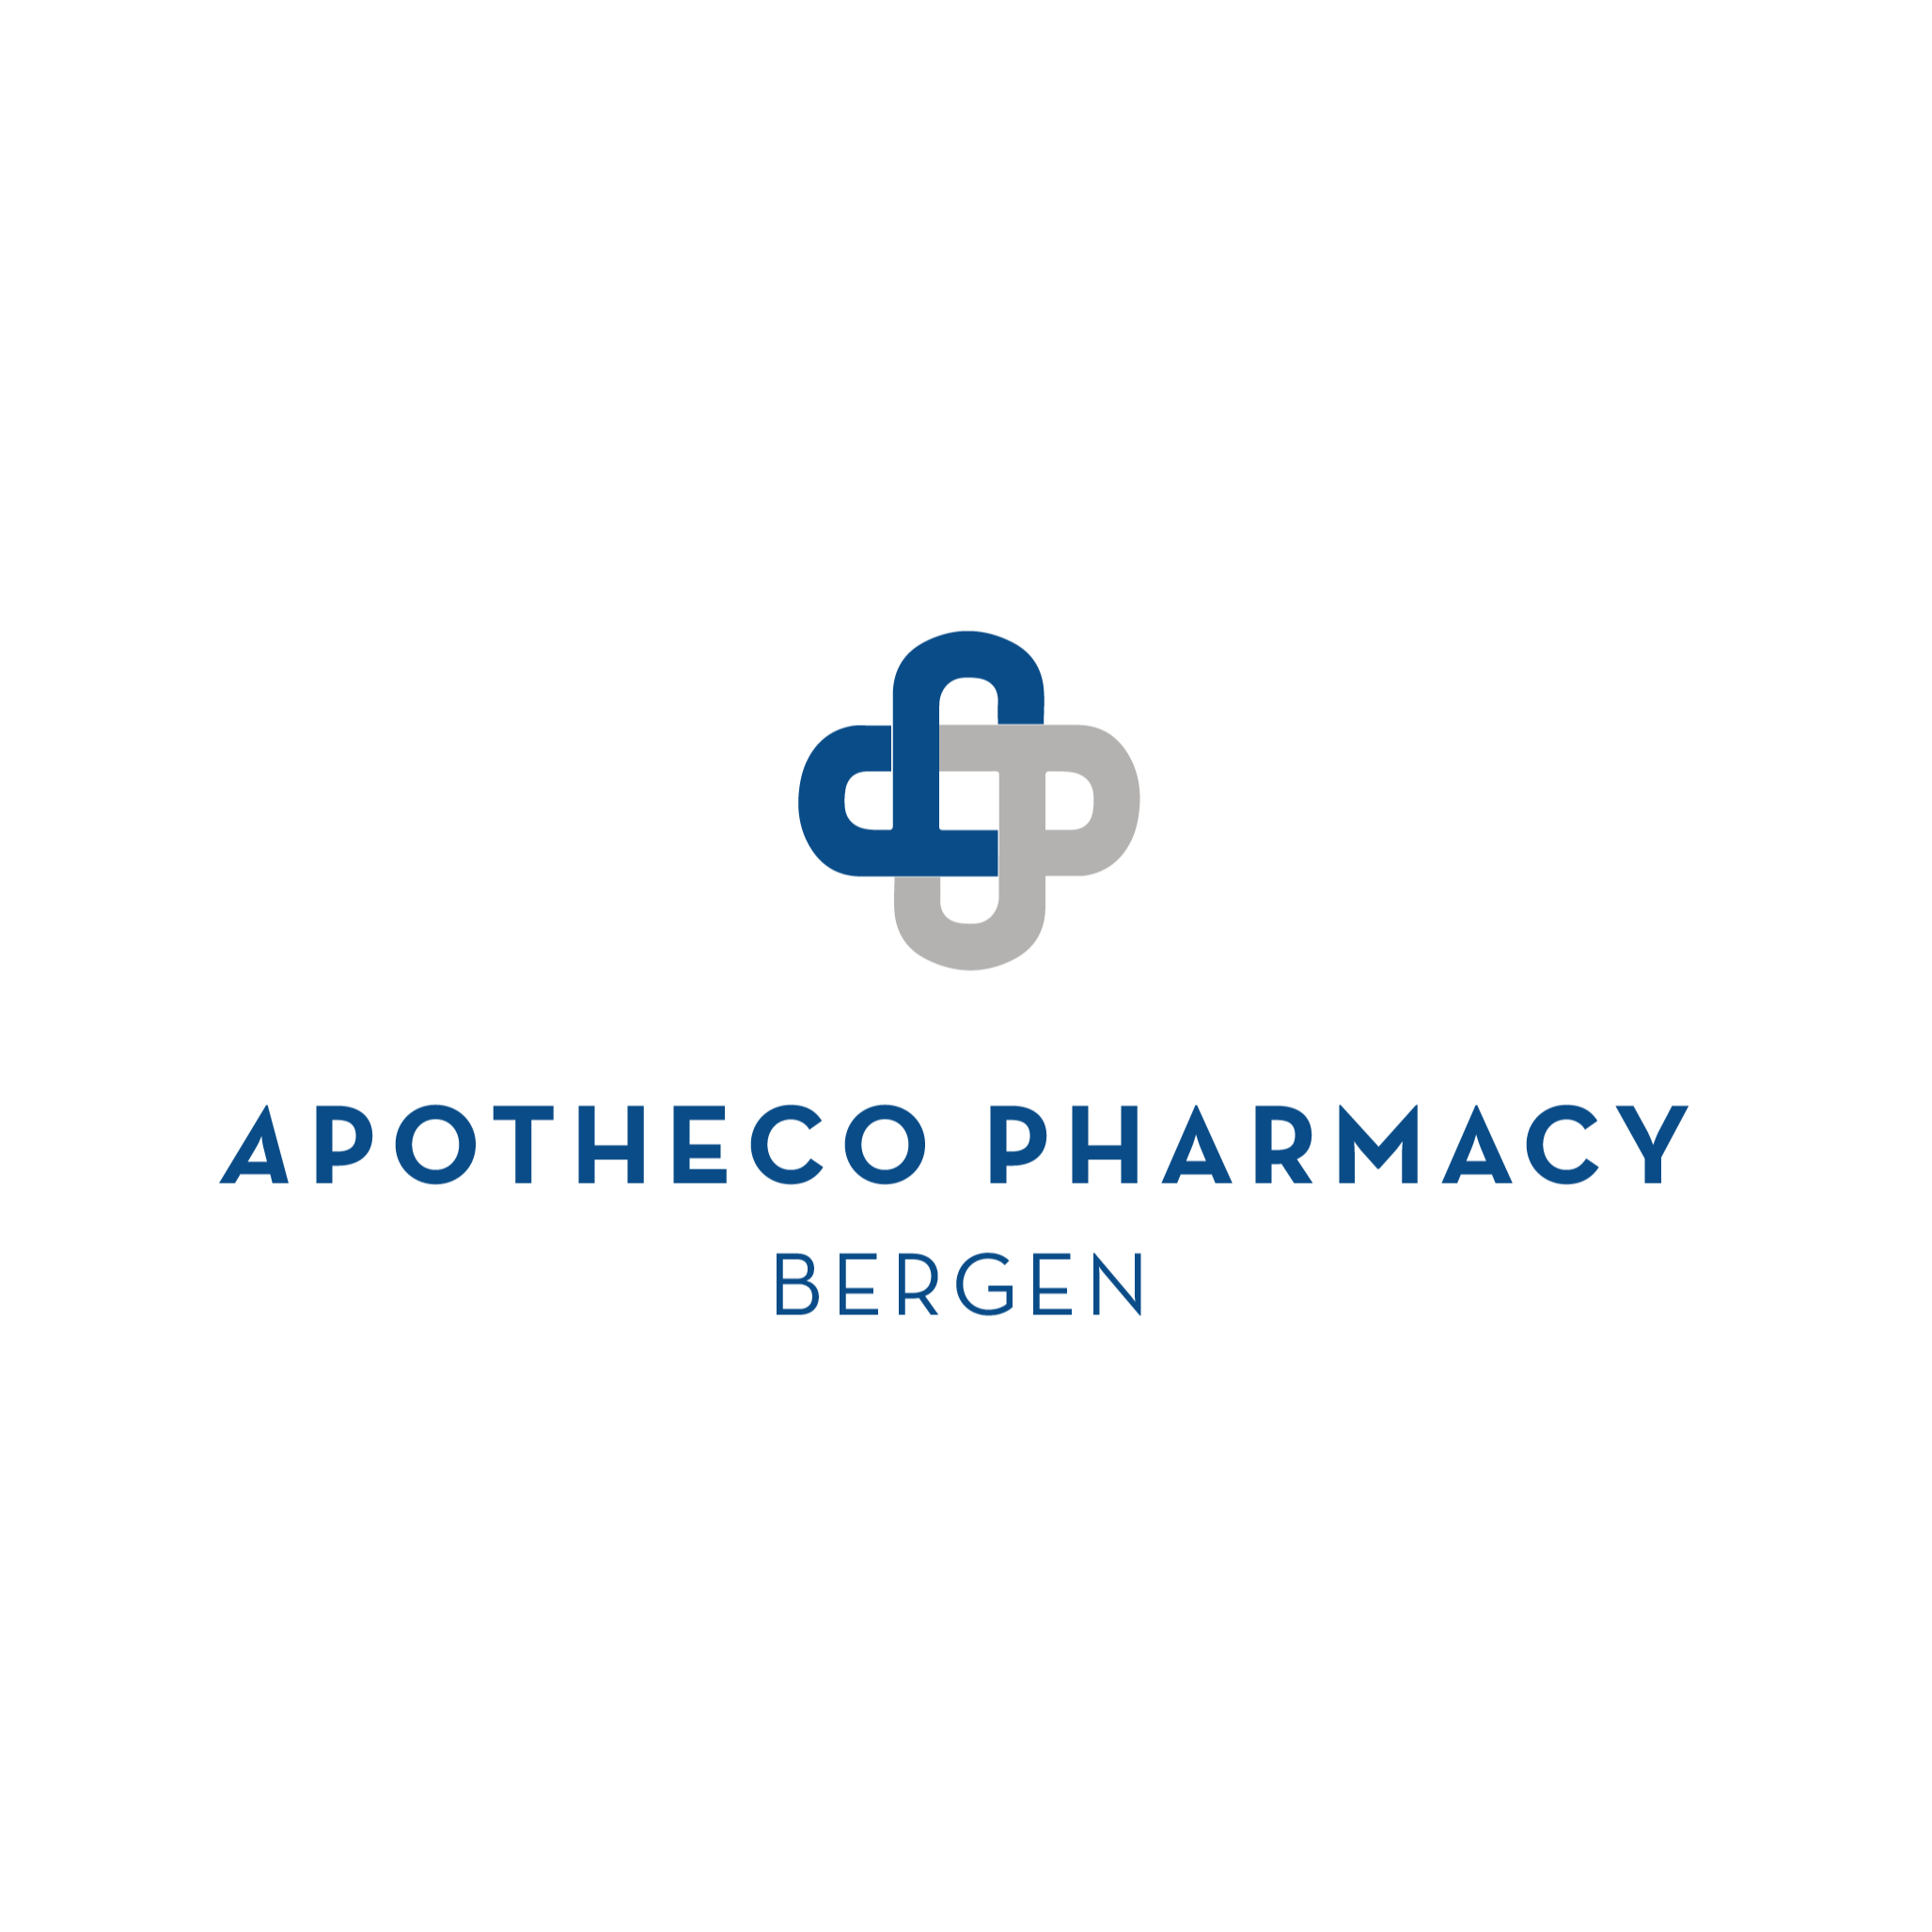 Apotheco Pharmacy Bergen - Dermatology Pharmacy Logo